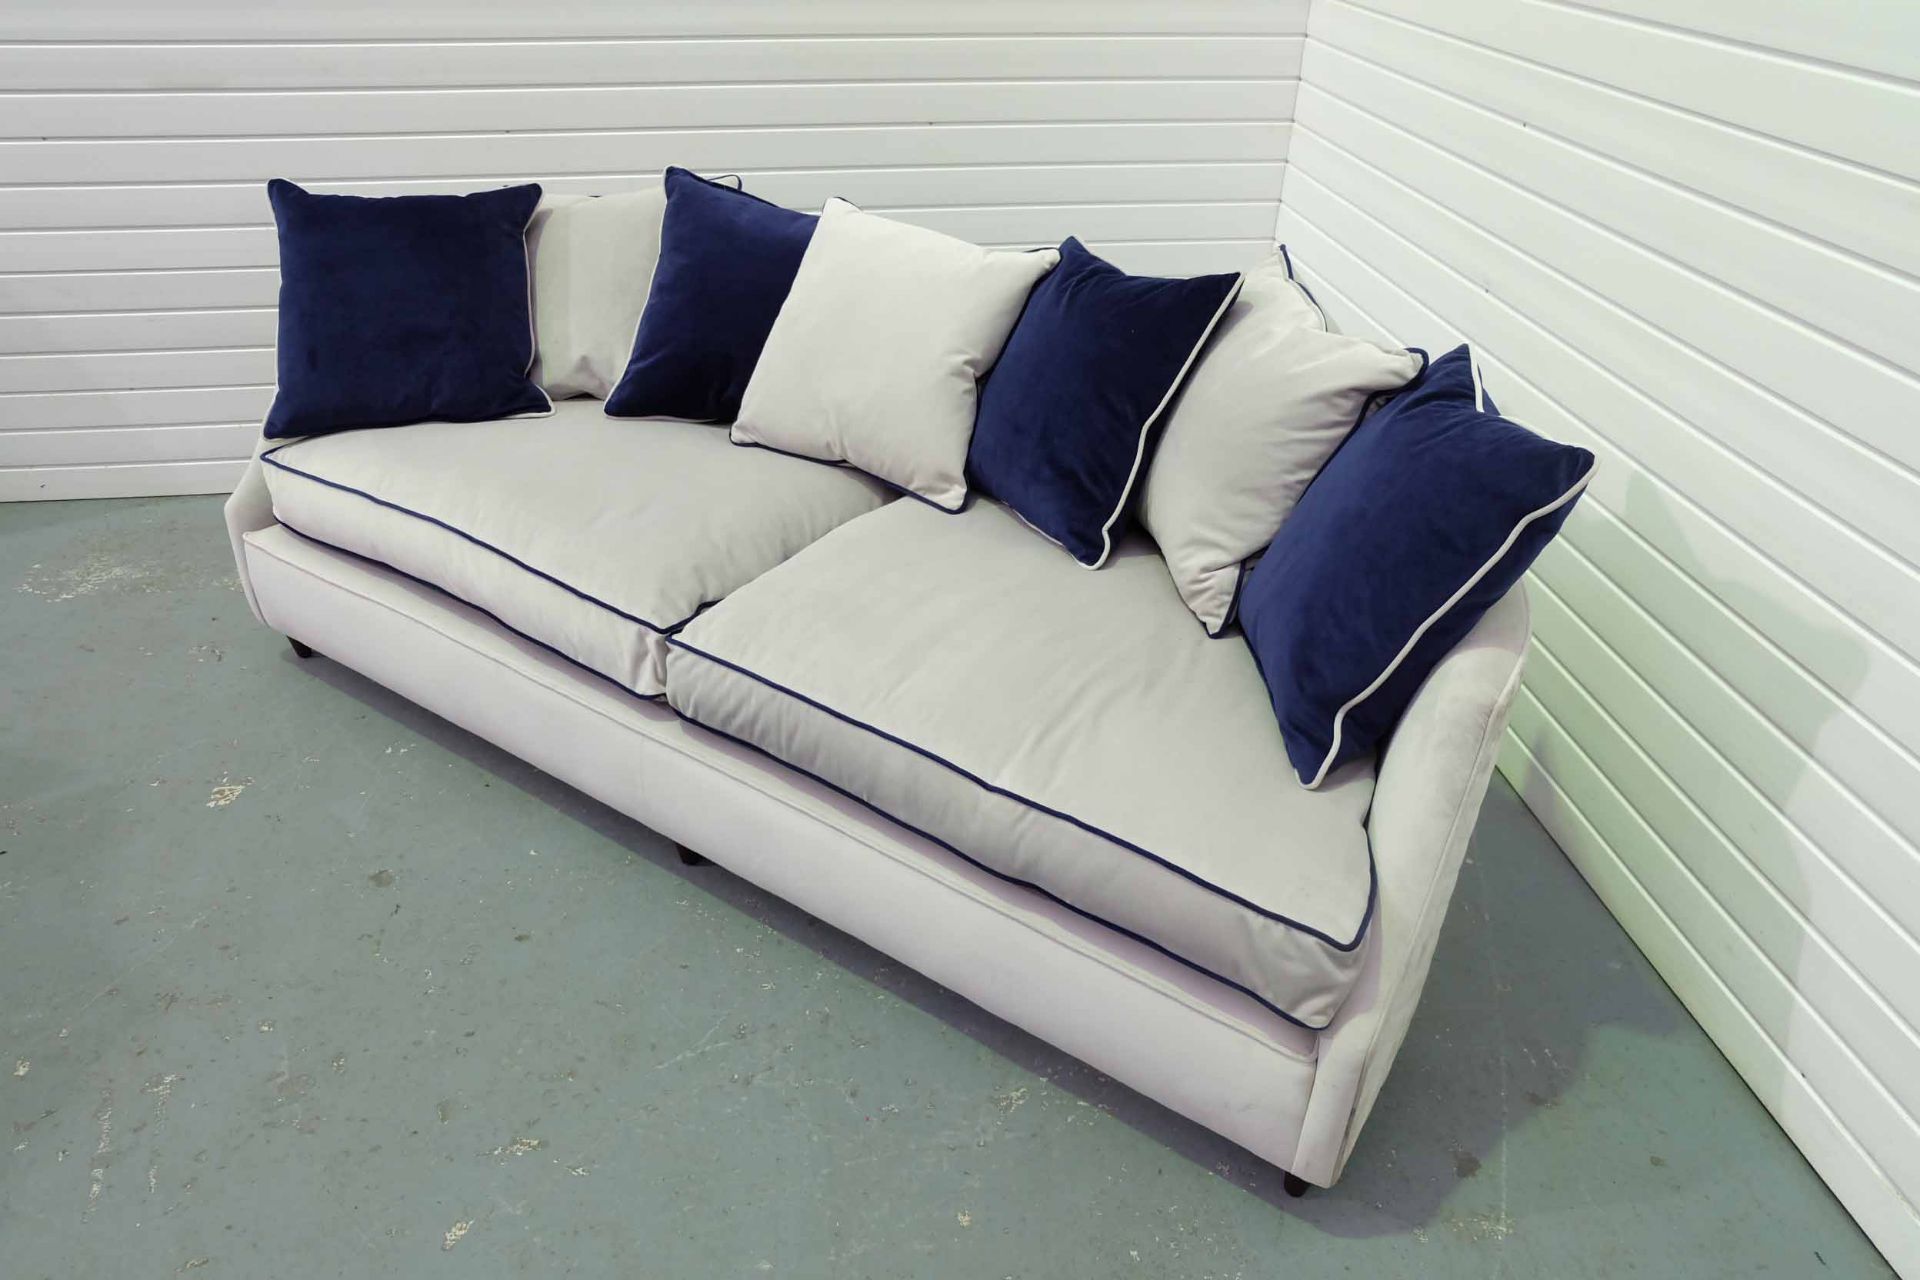 Steed Upholstery 'Hockley' Range Fully Handmade Scatter Back Snuggler Sofa. Includes 7 Scatter Cushi - Image 2 of 7